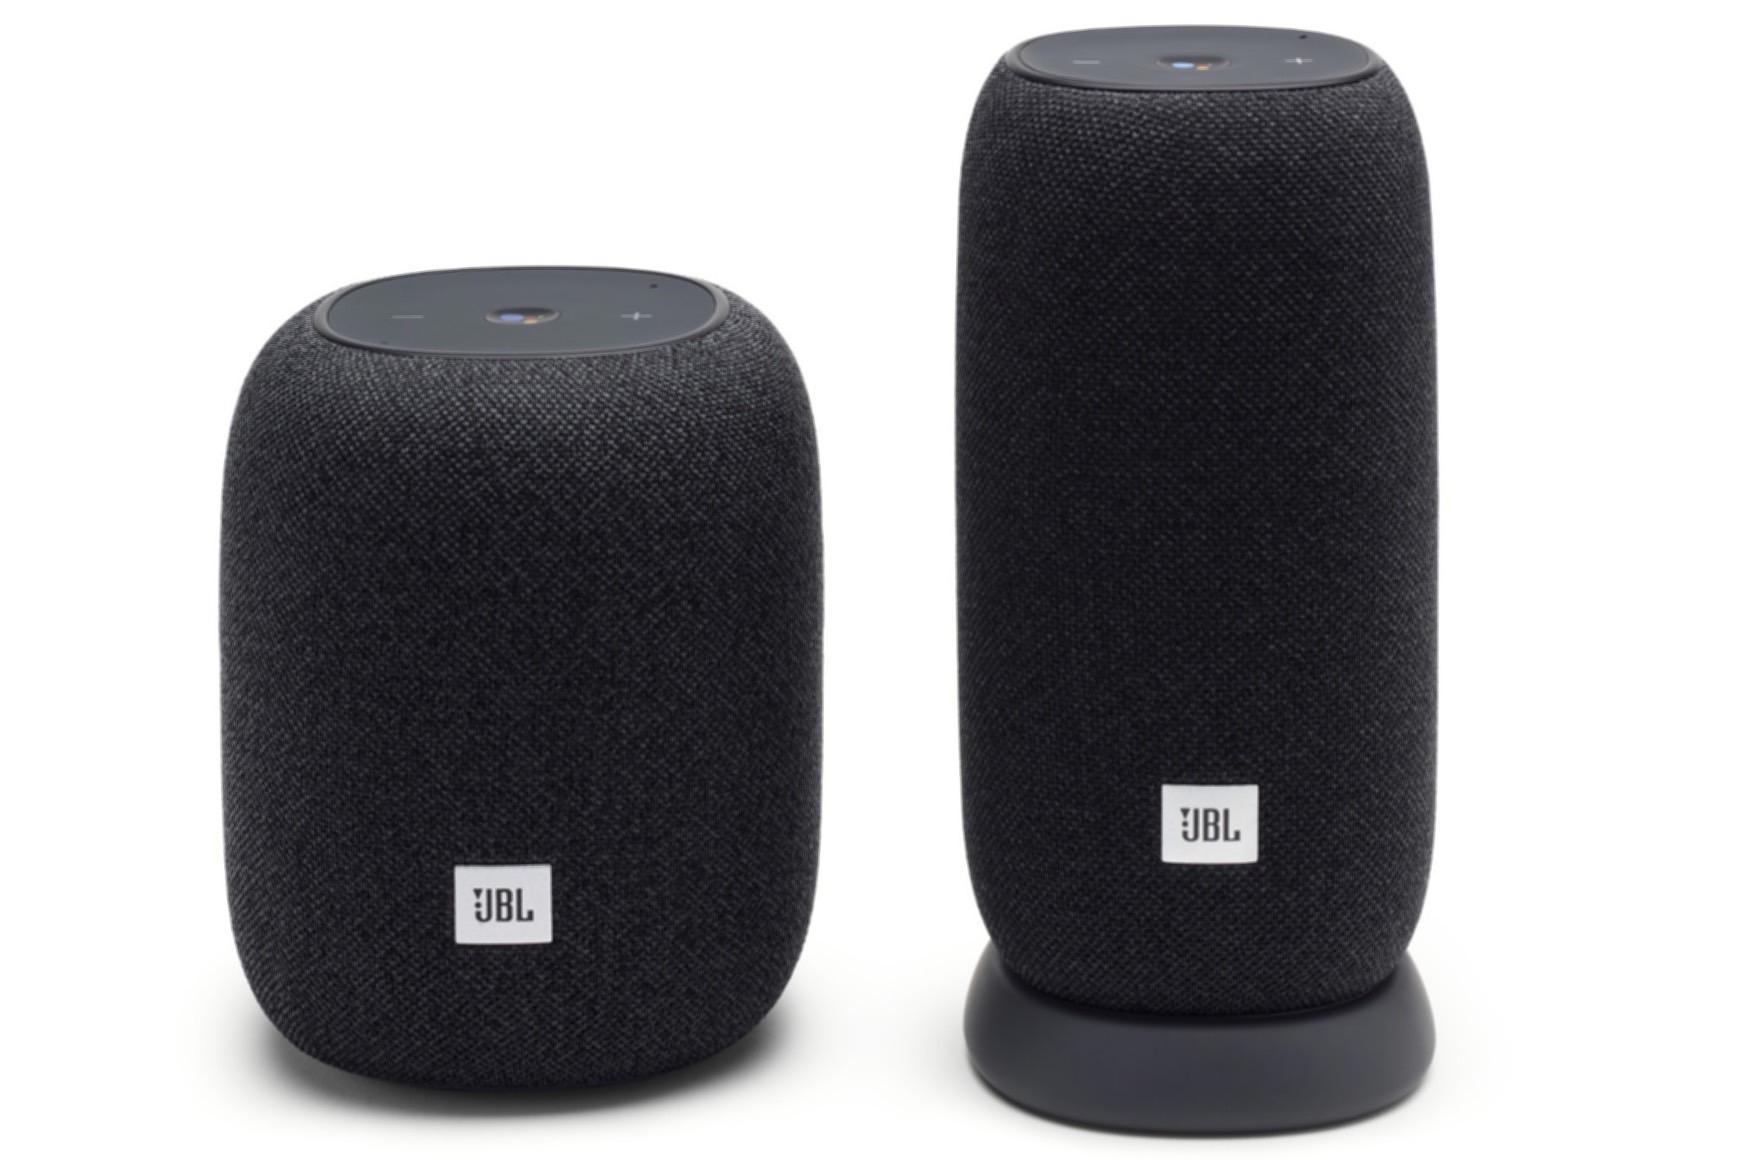 JBL's New Wireless Speakers Converse Language | Trends